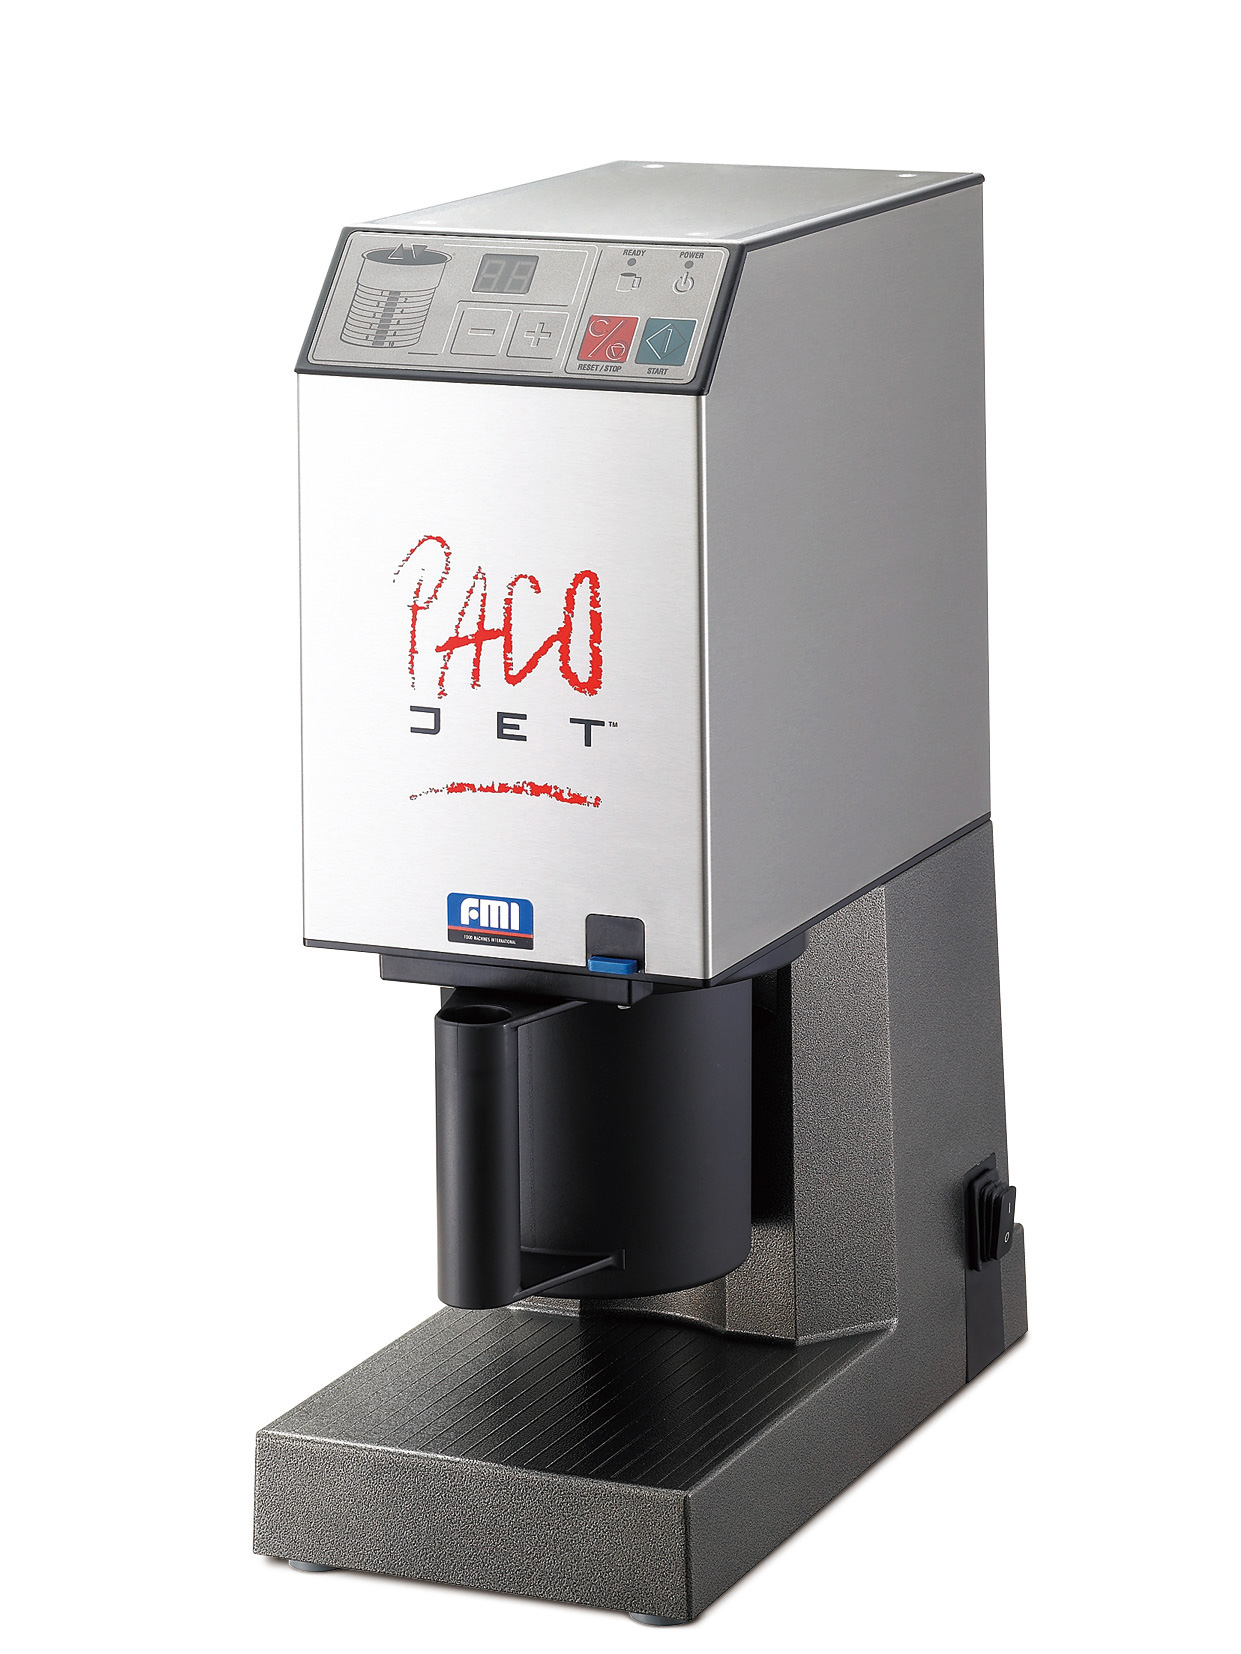 □FMI PJ-1 パコジェット PACOJET 冷凍粉砕調理器 ミキサー 付属品多数 